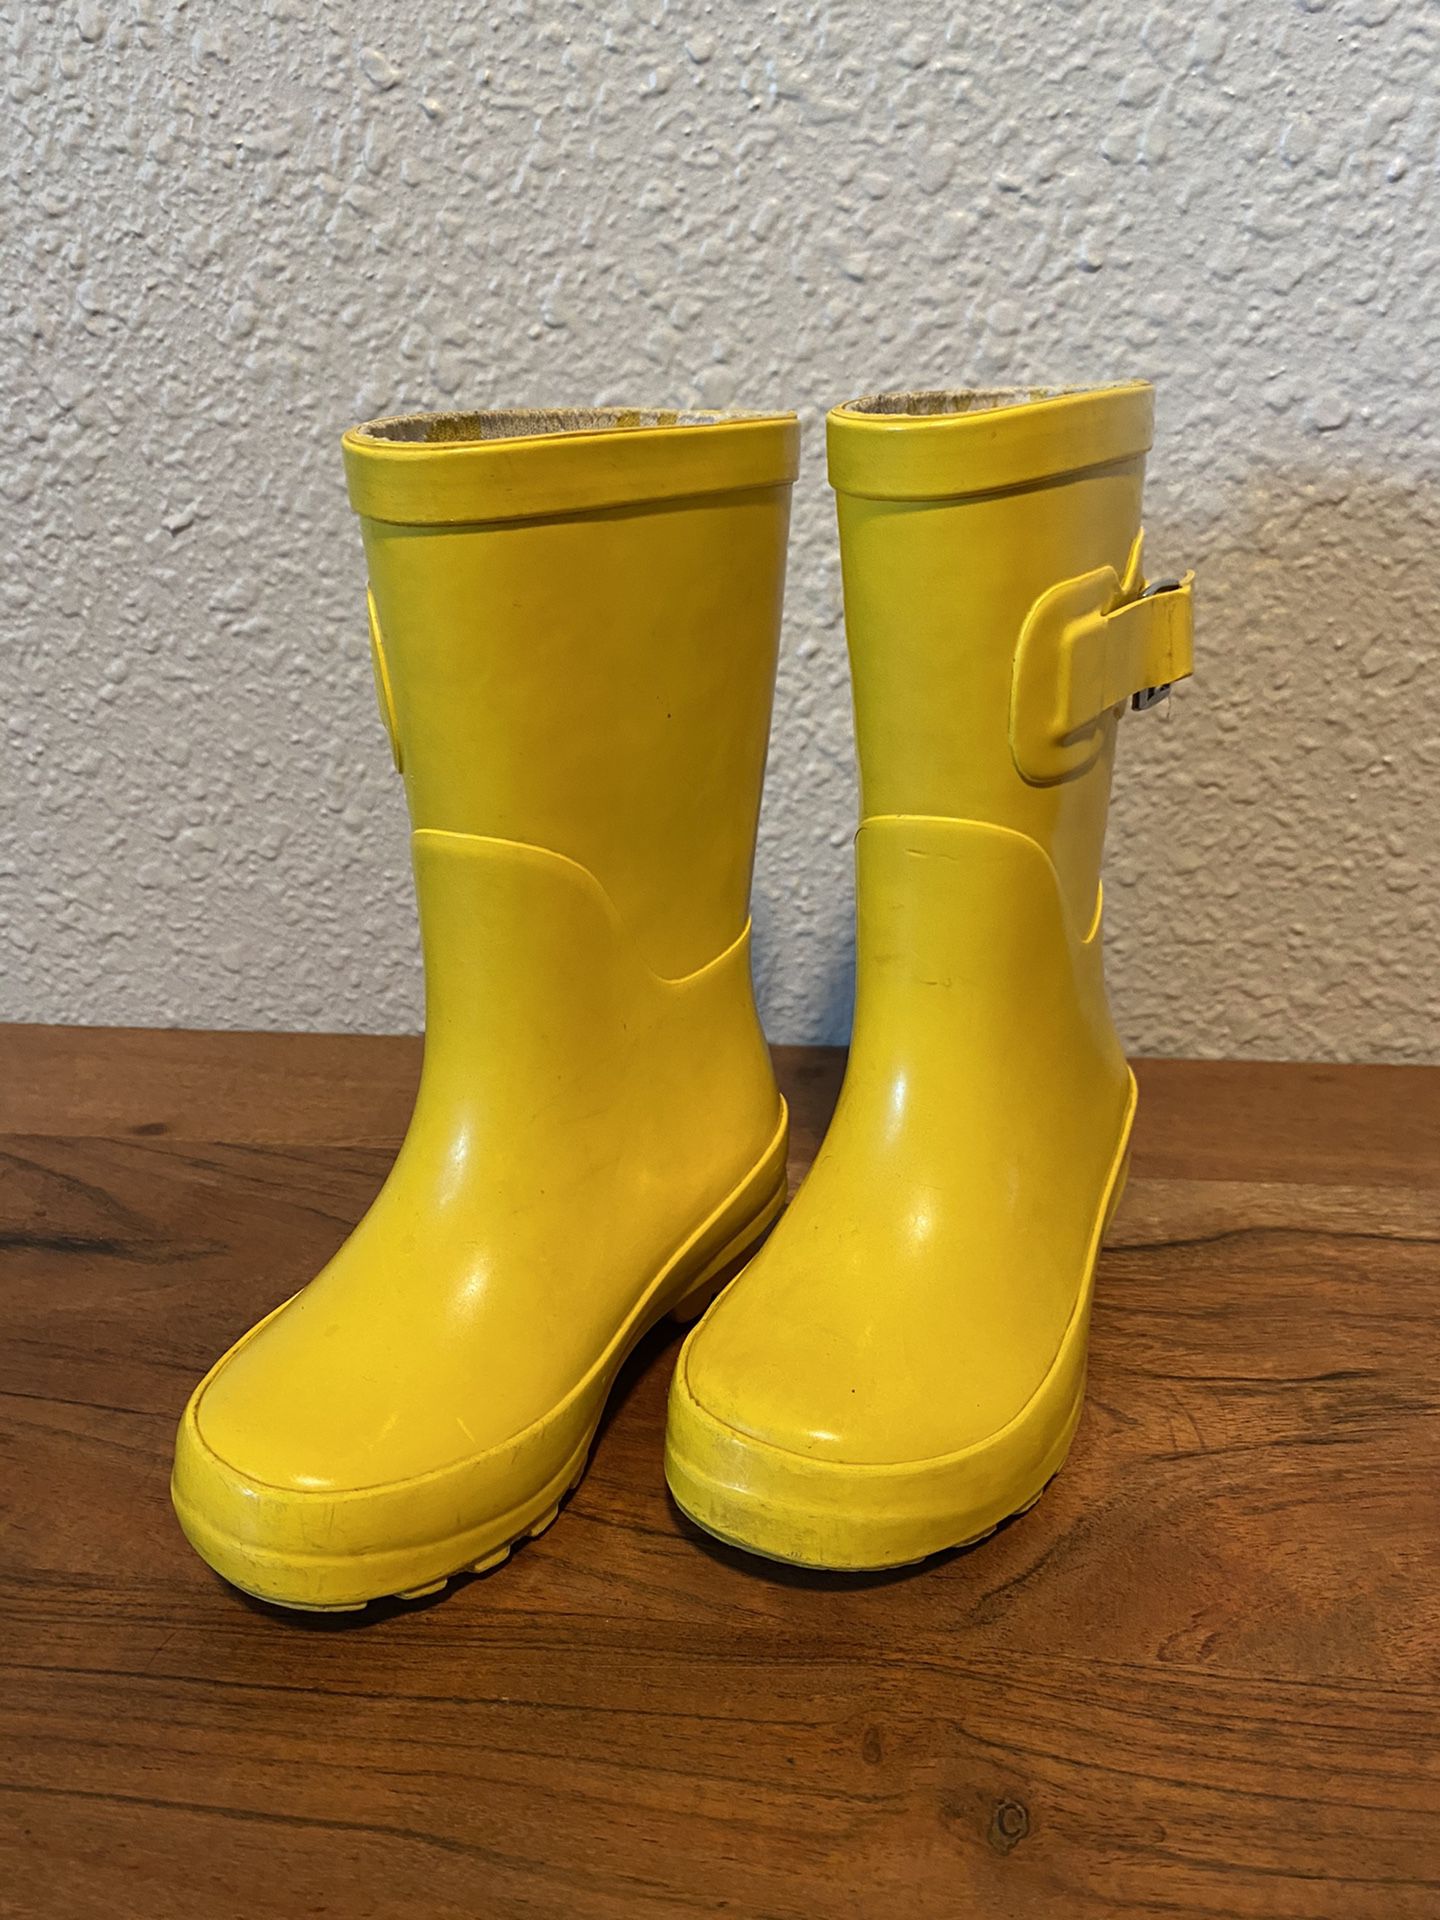 Toddler girls rain boots size 5/6